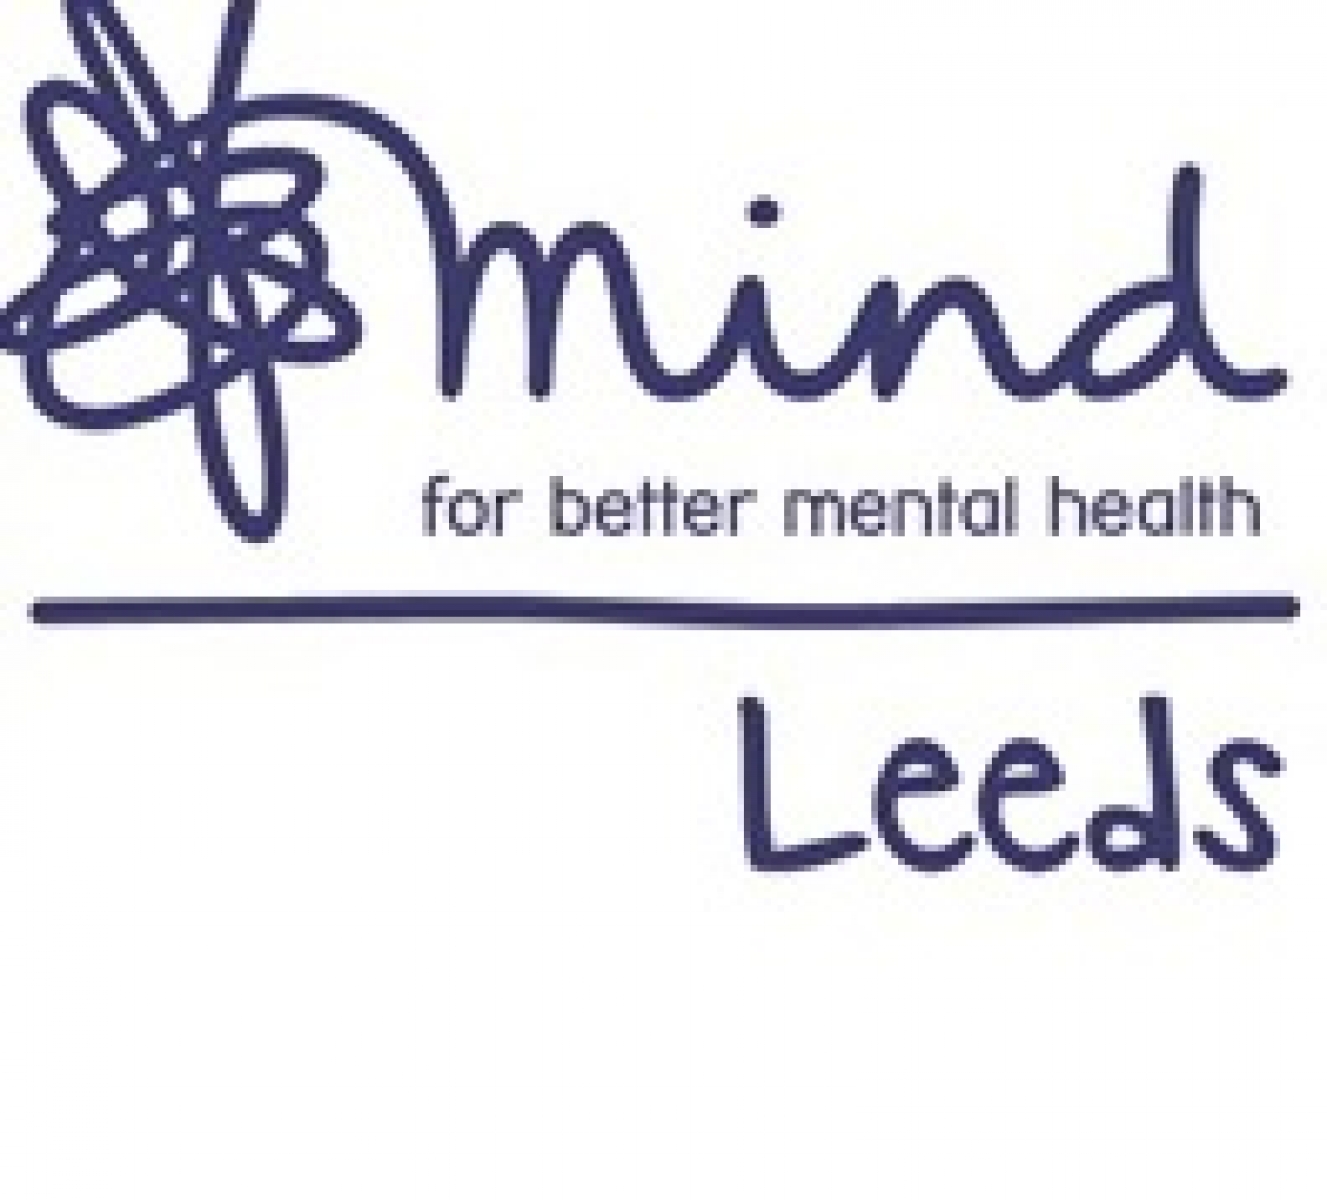 Leeds Mind eCards